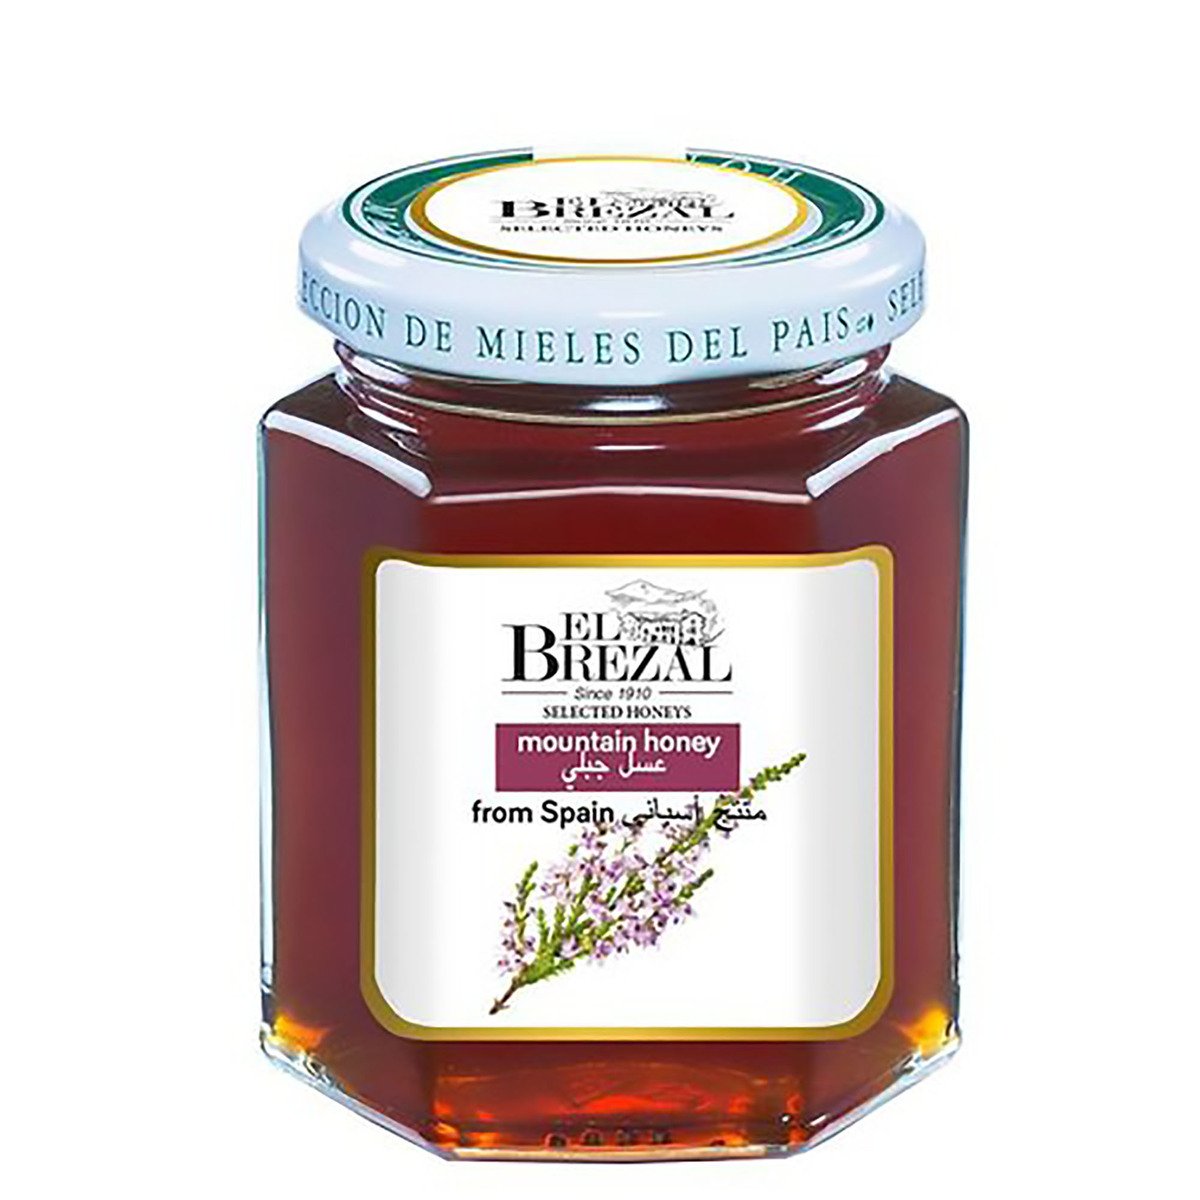 El Brezal Honey Mountain 250g